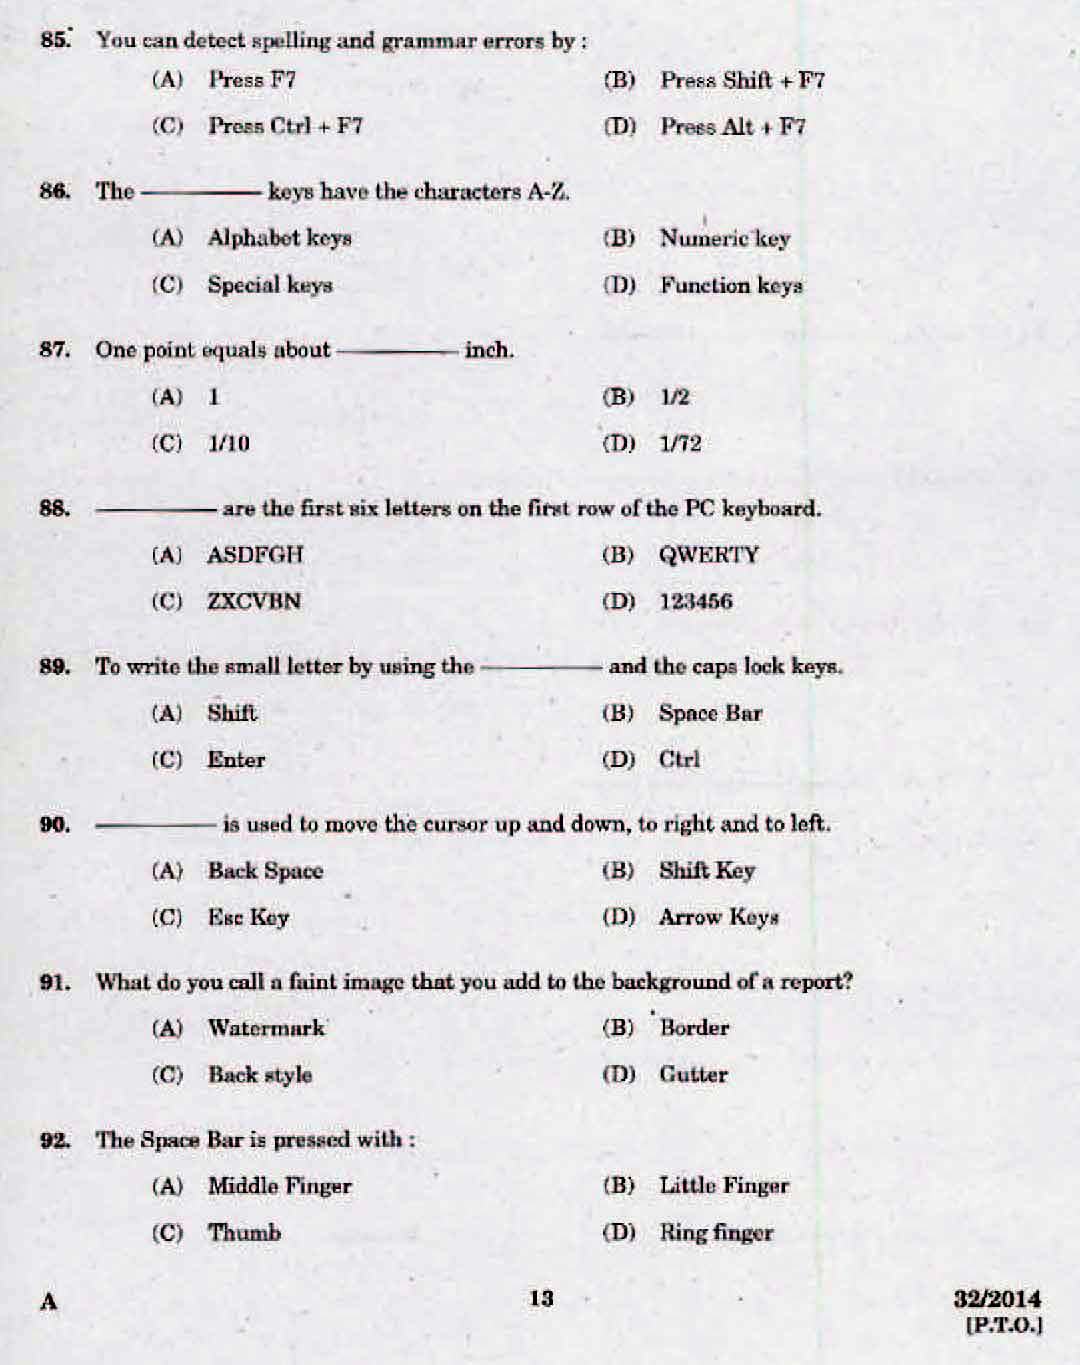 Kerala LD Typist Exam 2014 Question Paper Code 322014 11